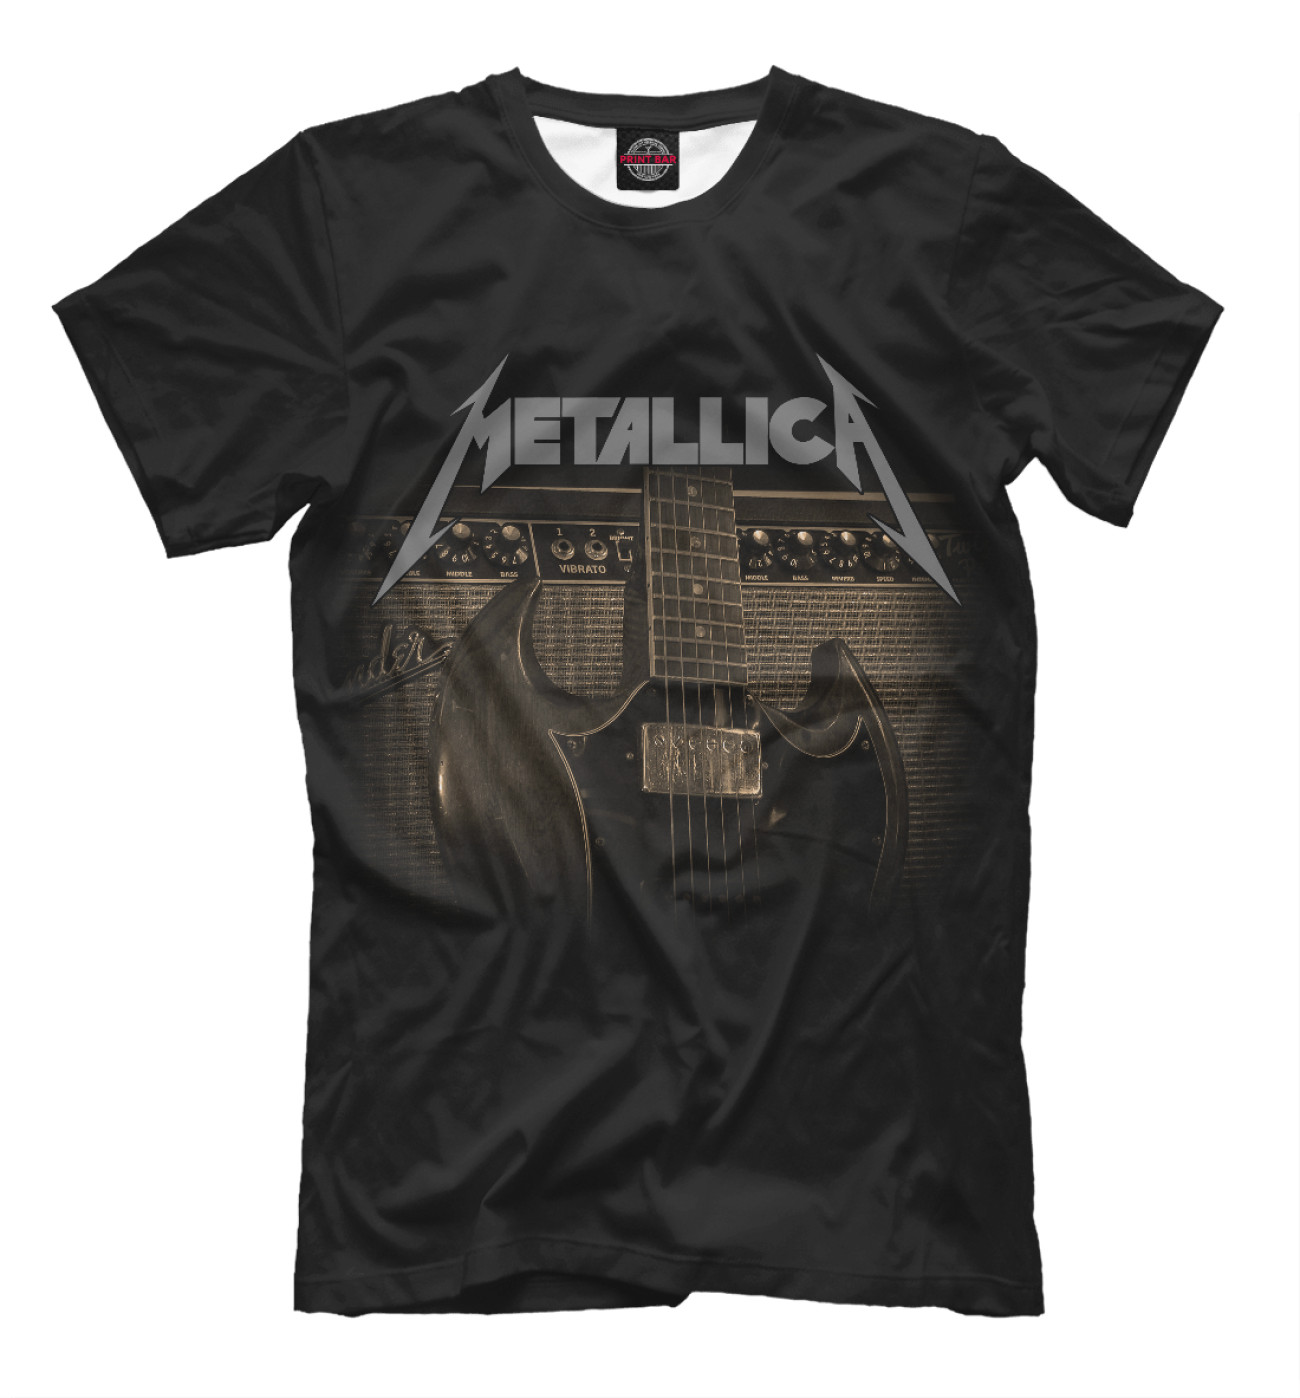 Мужская Футболка Metallica, артикул: MET-728107-fut-2